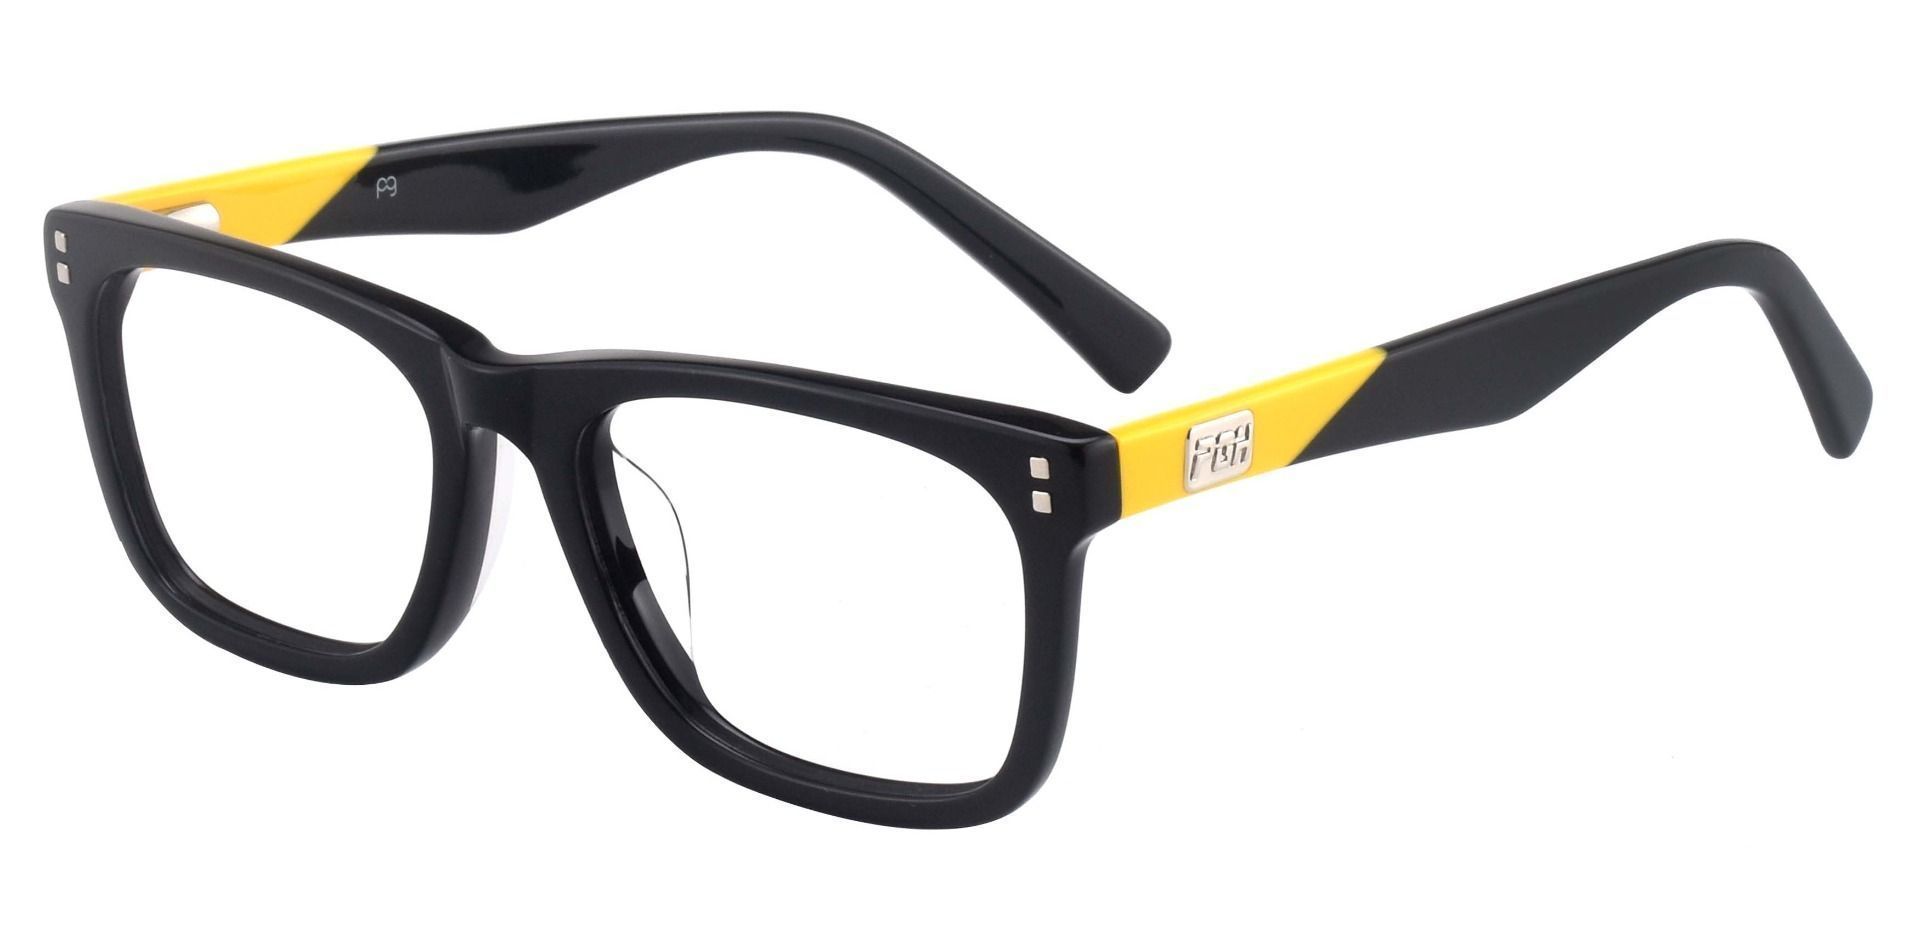 Blitz Rectangle Progressive Glasses - The Frame Is Black And Yellow